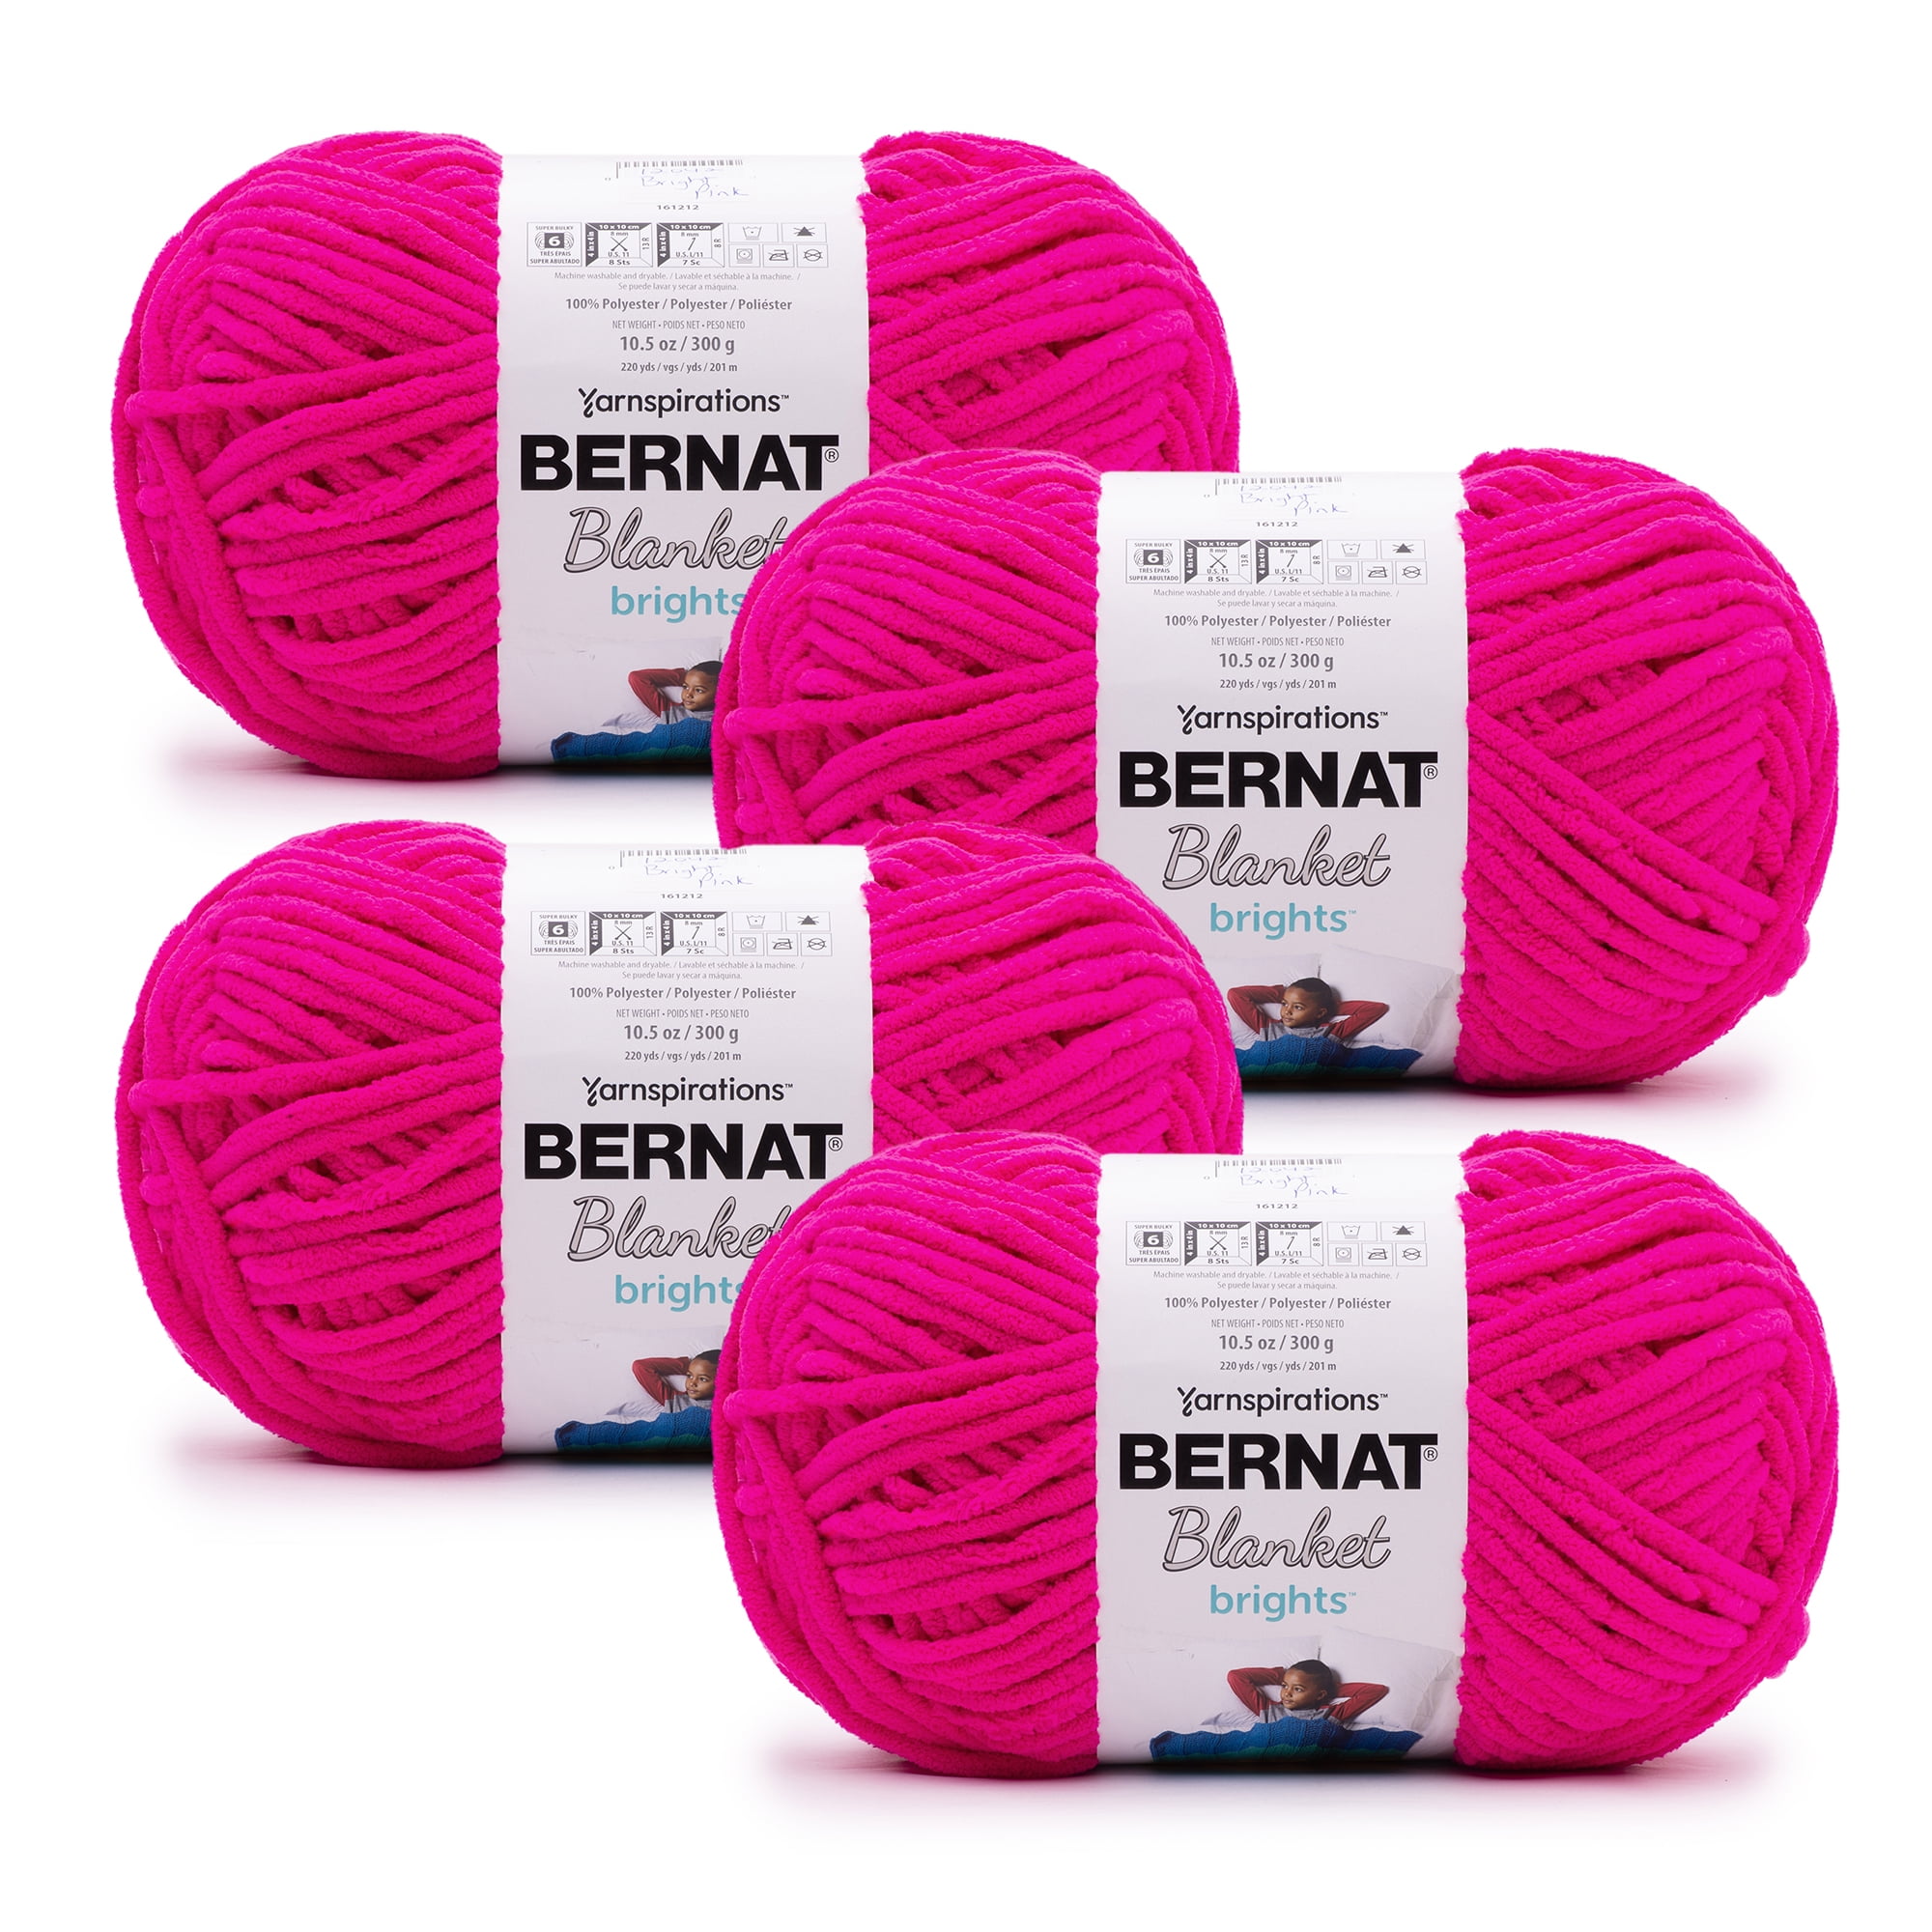 Bernat Blanket Brights Big Ball Yarn, Pixie Pink, 10.5 oz